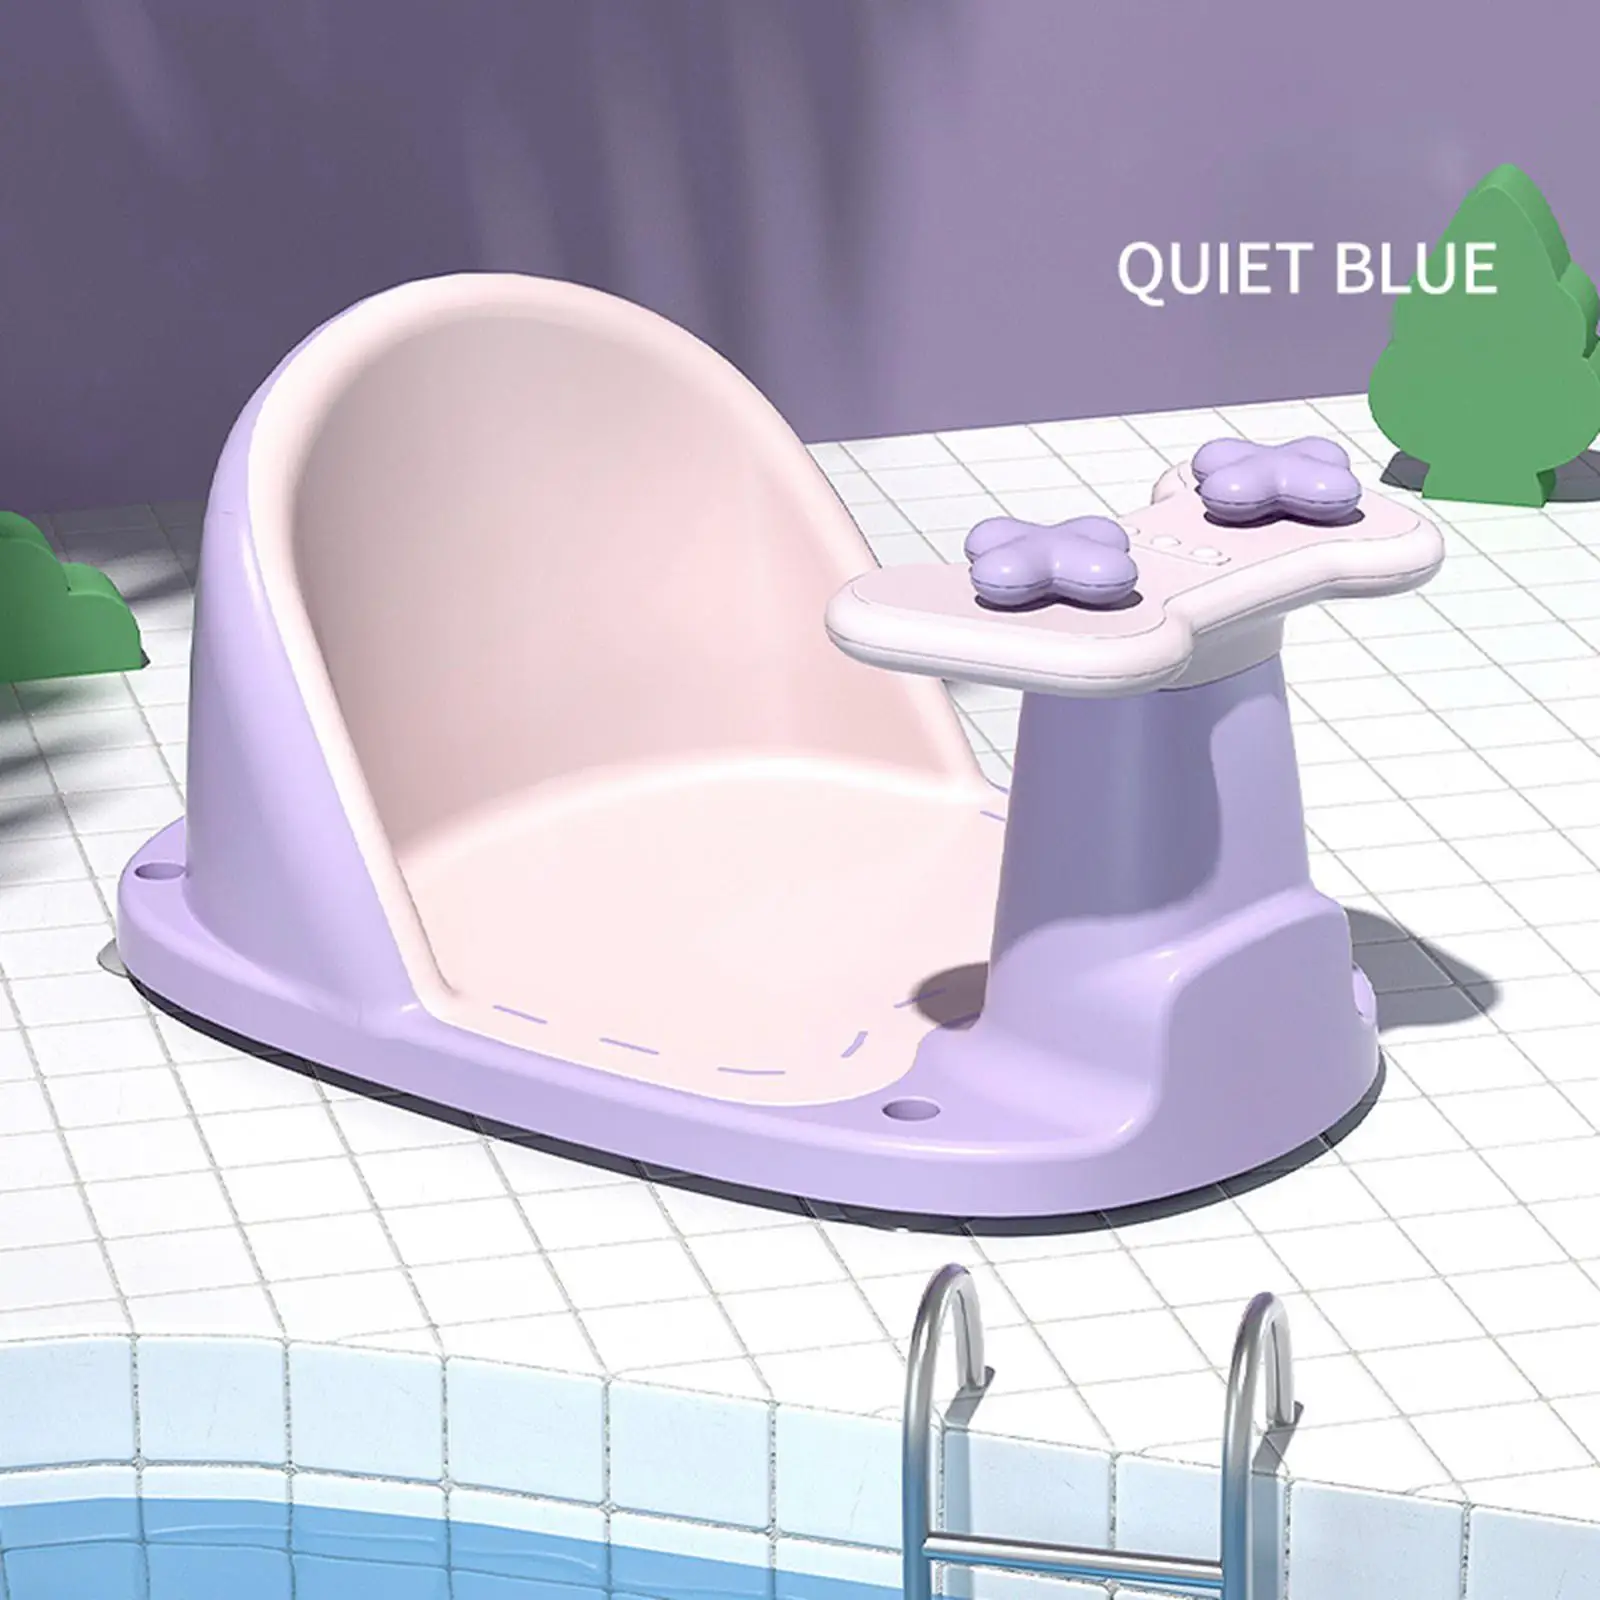 Non Slip Bby Bthtub Set Bthtub Chir with Suction Cup Shower Set Soft Set Pd for 6-18 Months Kids Newborns Toddlers